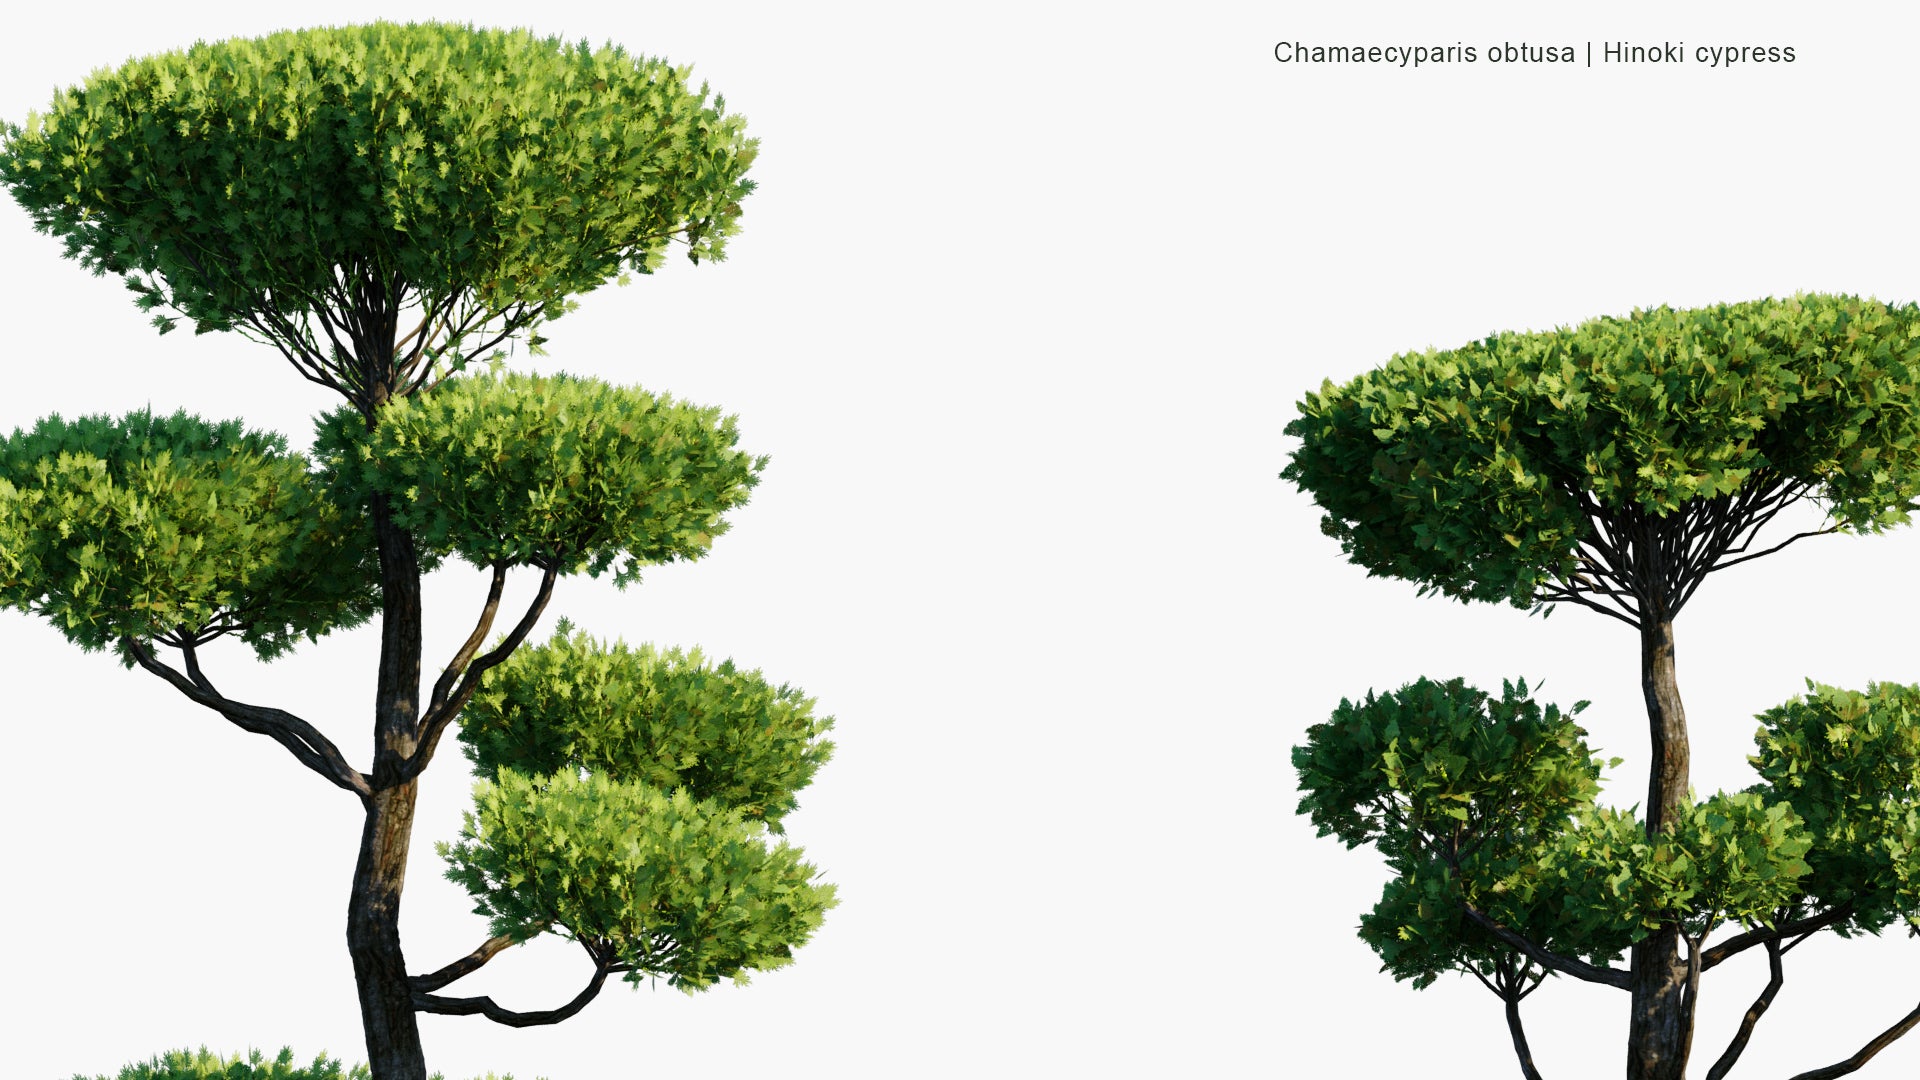 Low Poly Chamaecyparis Obtusa - Japanese Cypress, Hinoki Cypress, Hinoki (3D Model)